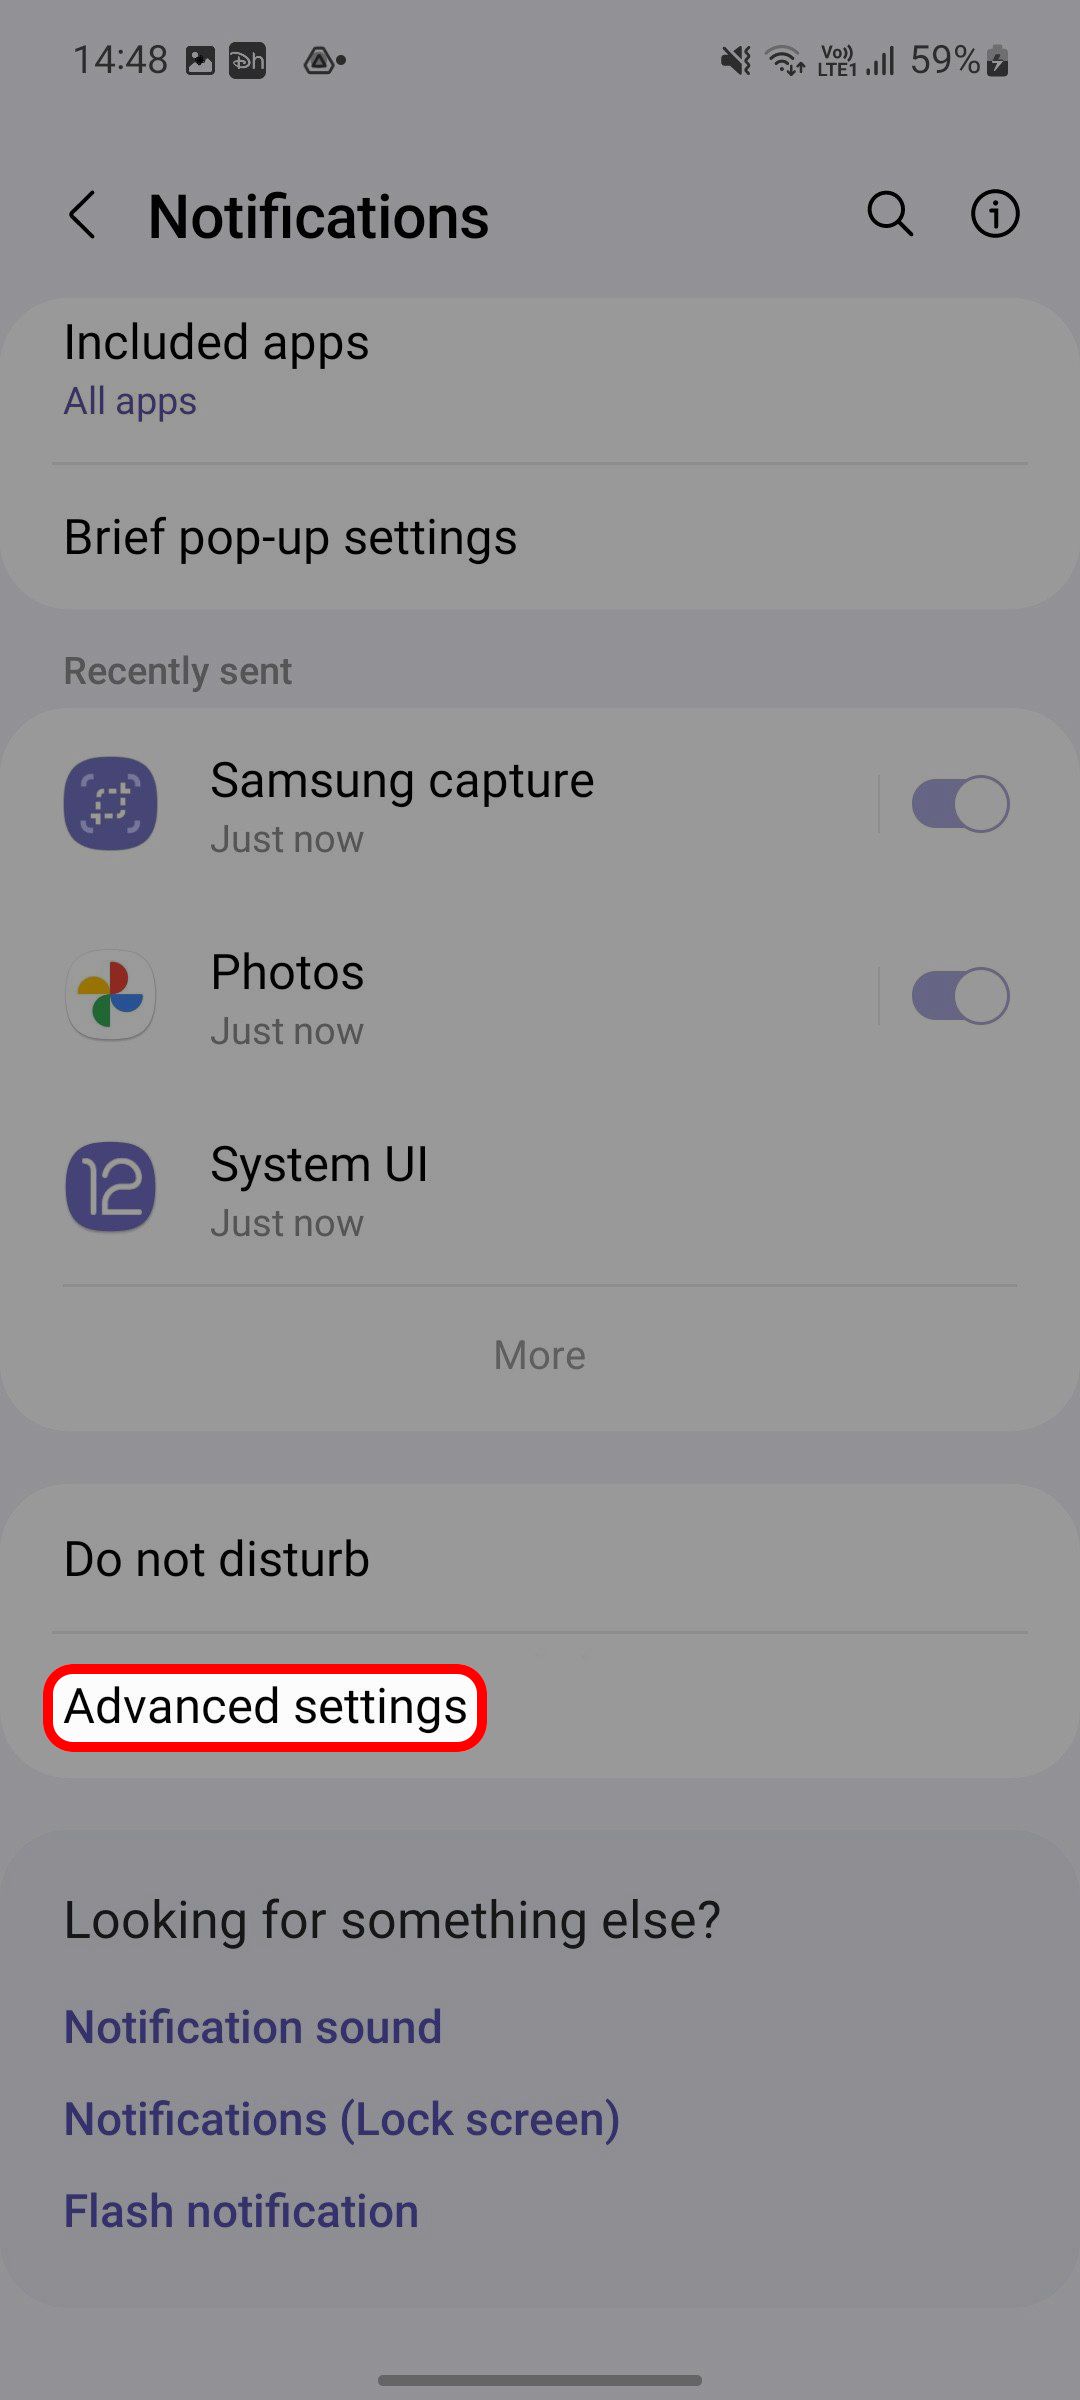 Samsung One UI Notifications menu highlighting the Advanced settings option